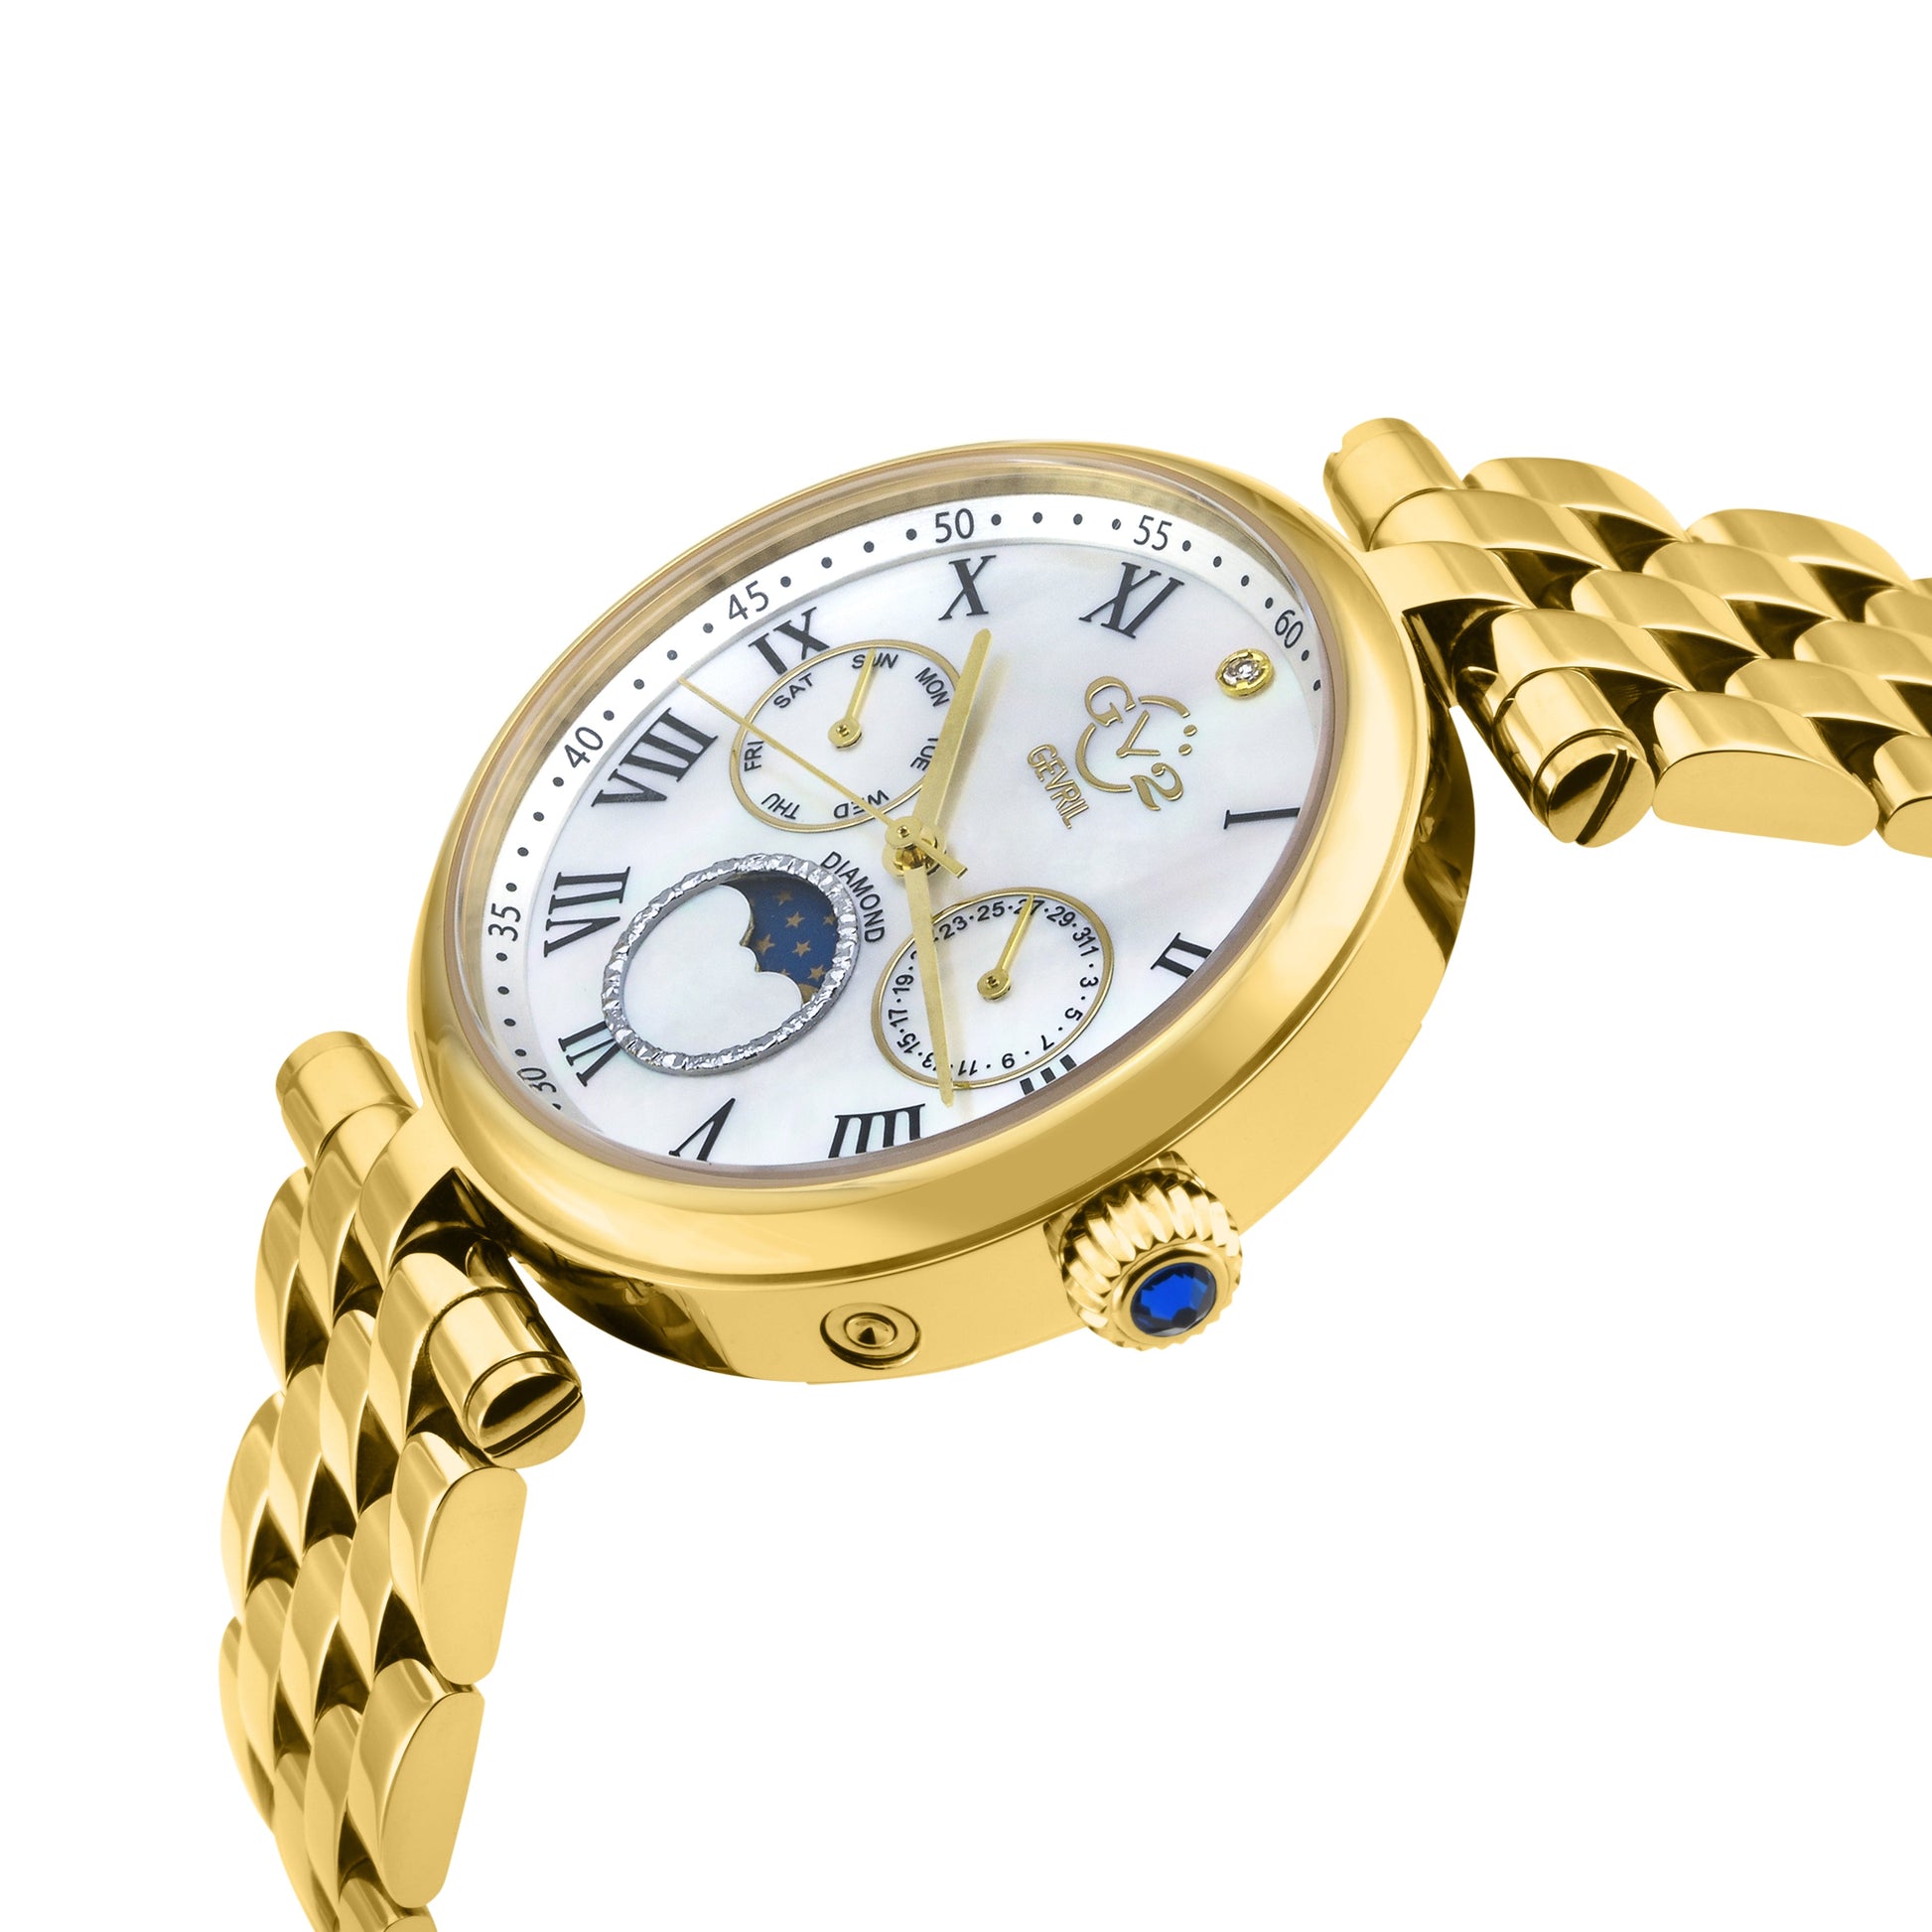 Gevril-Luxury-Swiss-Watches-GV2 Florence Diamond-12513